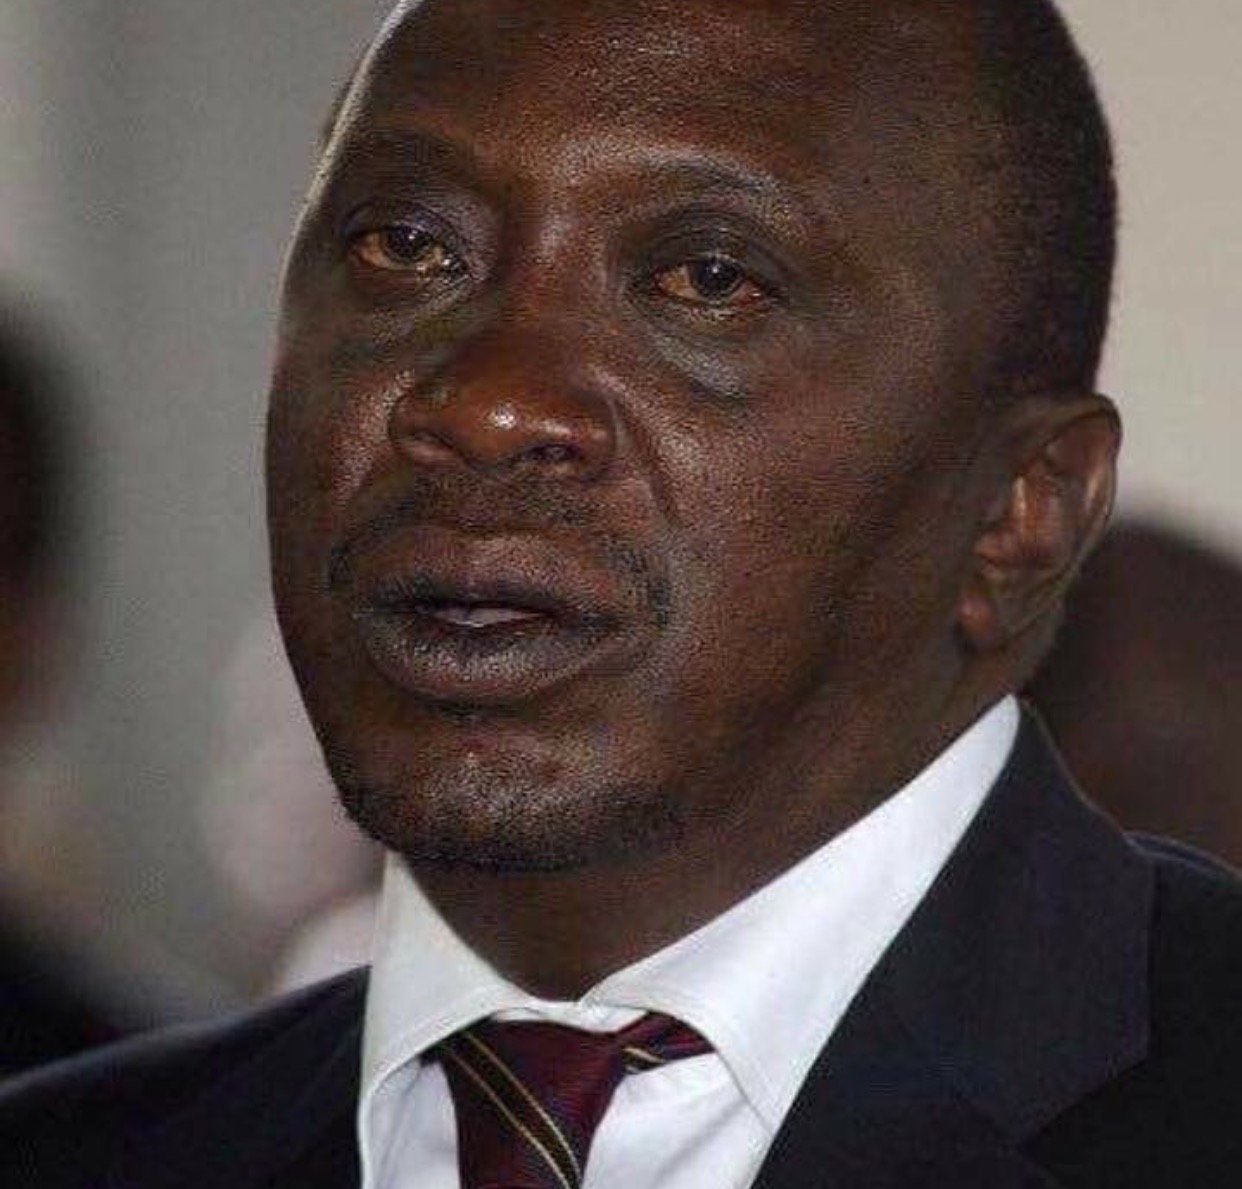 Kenyans on social media unleash hilarious memes after president Uhuru Kenyatta failed to attend the presidential debate